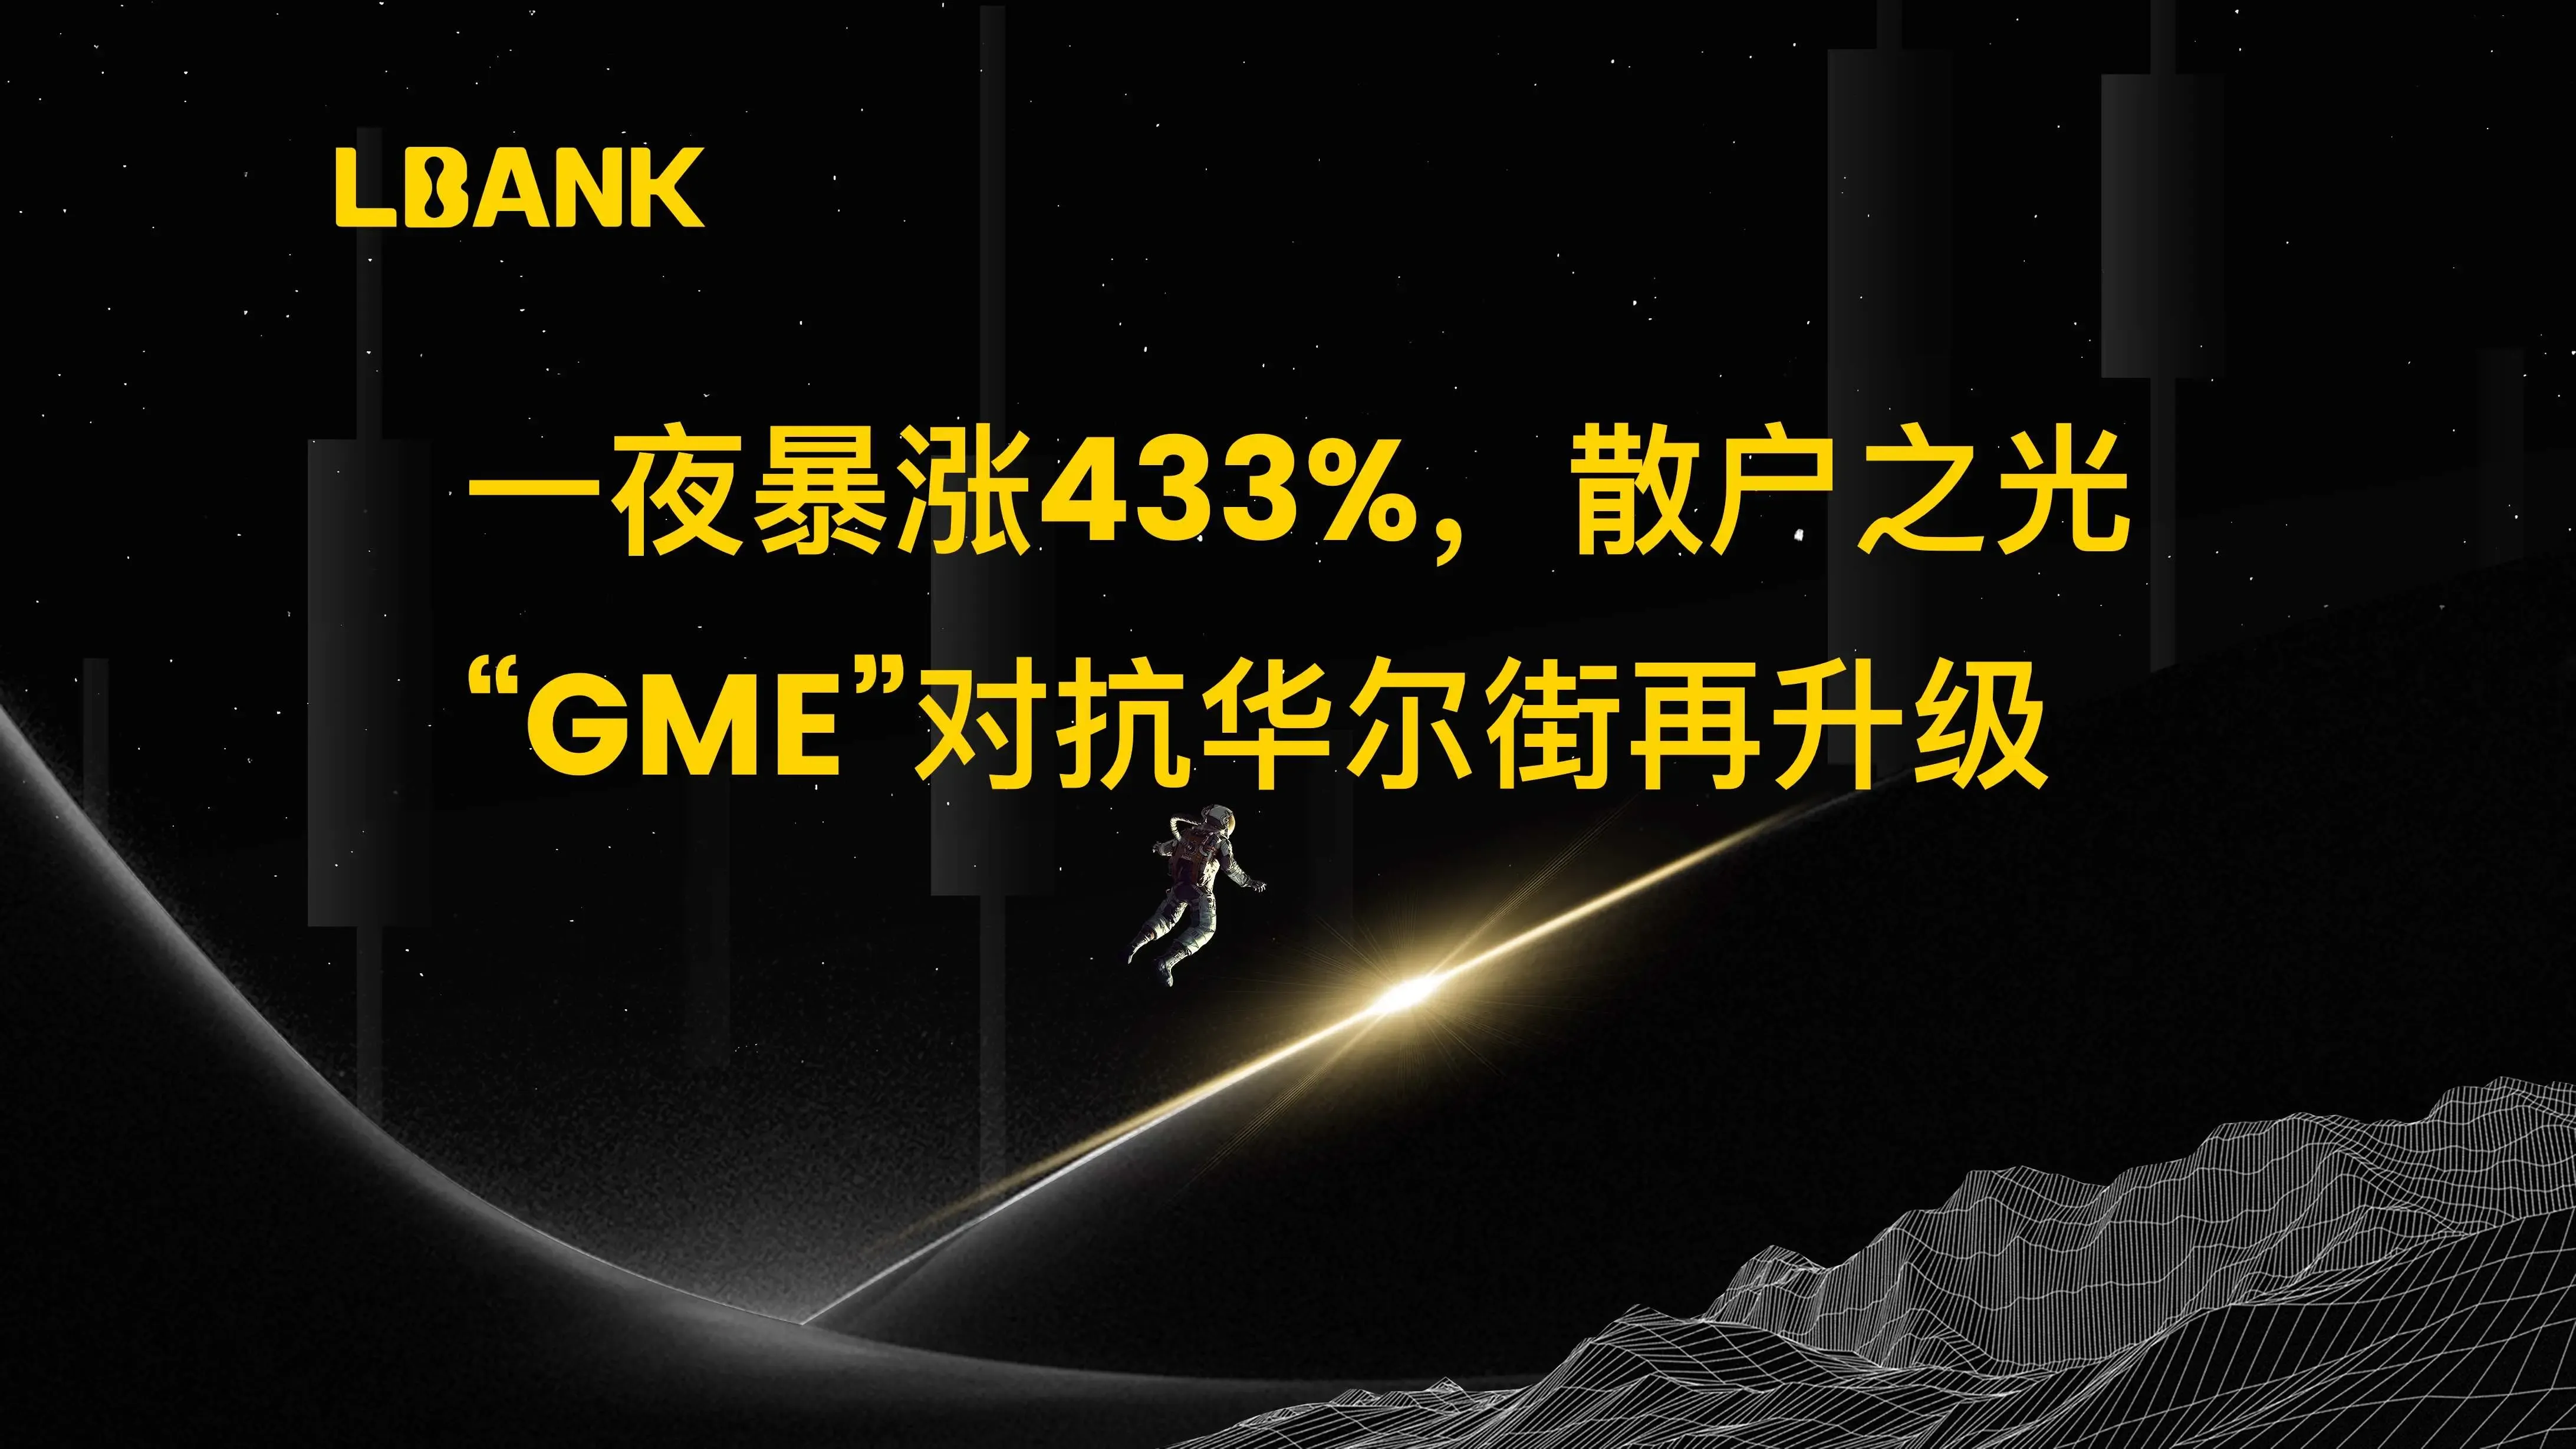 LBank观察：一夜暴涨 433%，散户之光“GME”对抗华尔街再升级